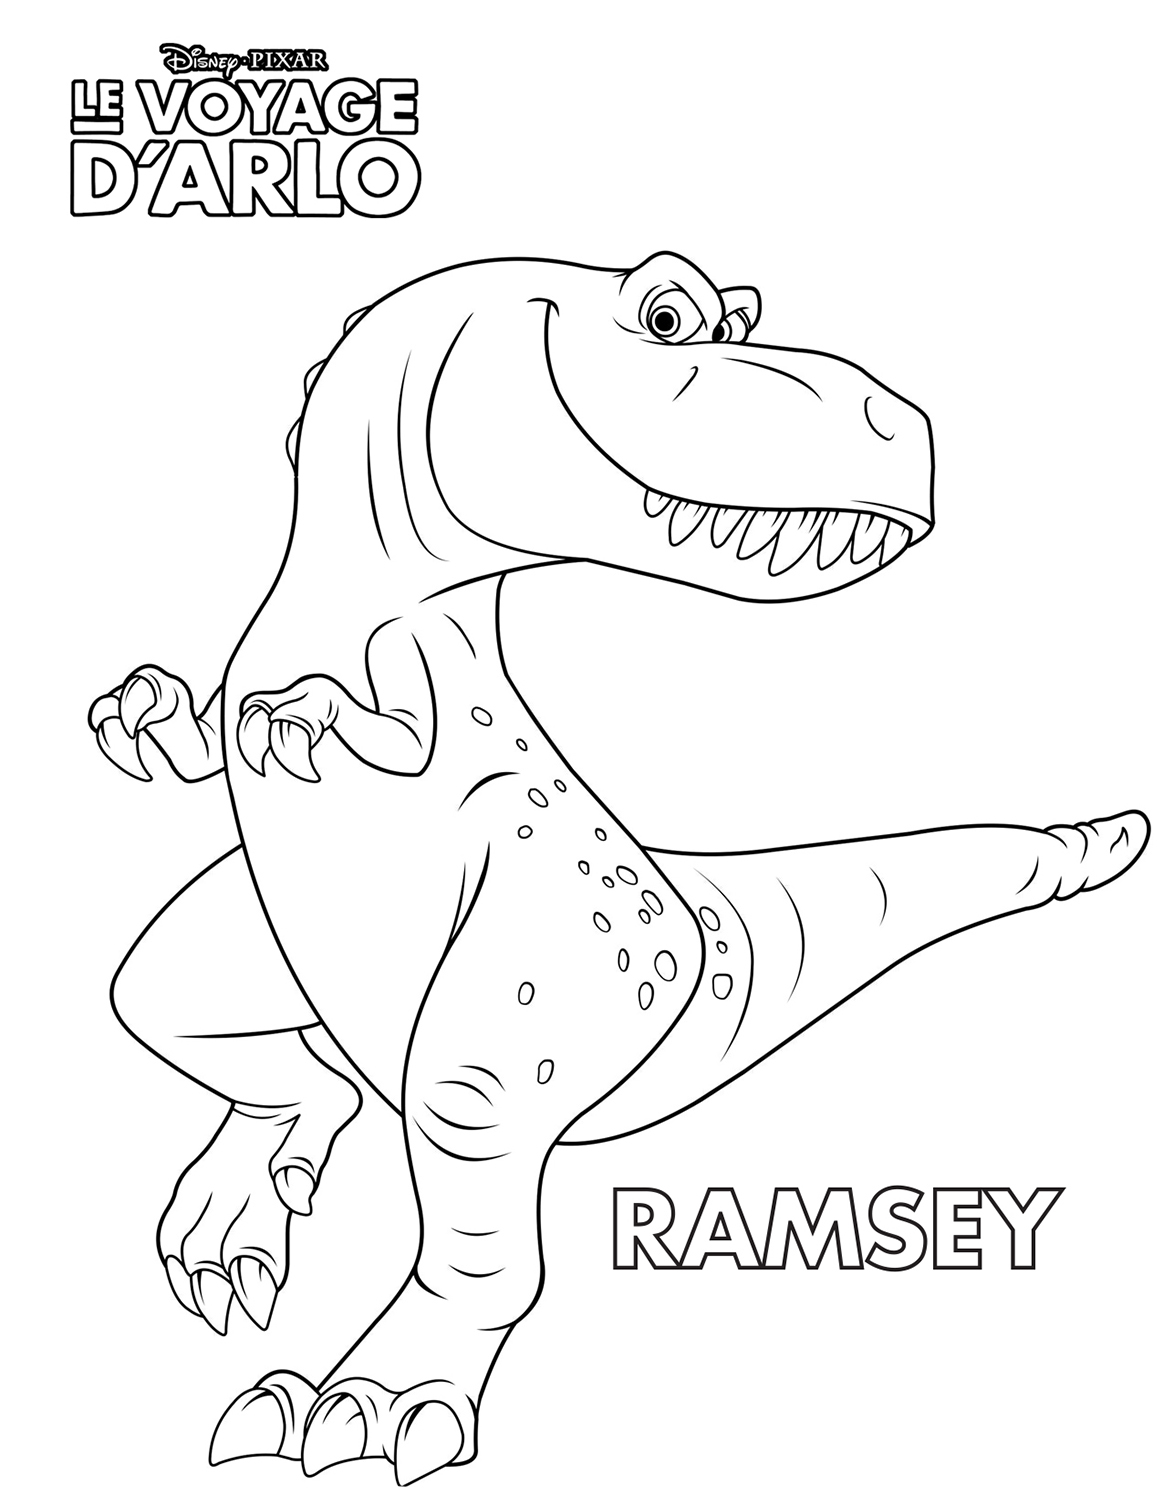 Ramsey est un Tyrannosaure femelleo